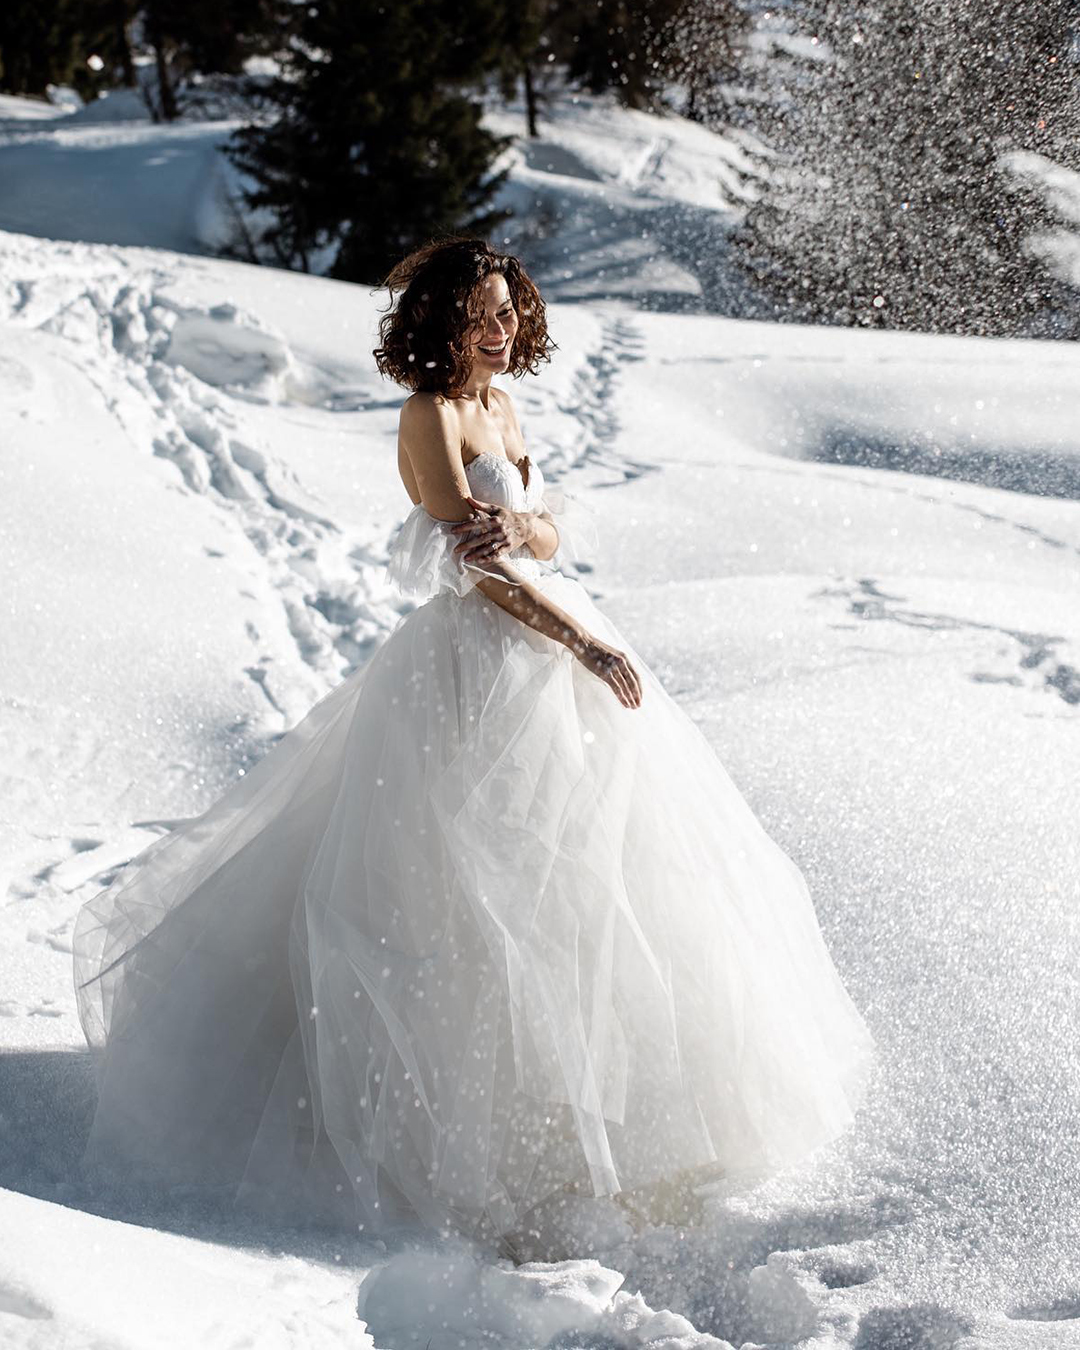 winter wedding dresses outfits simple strapless neckline elisabettalillyred